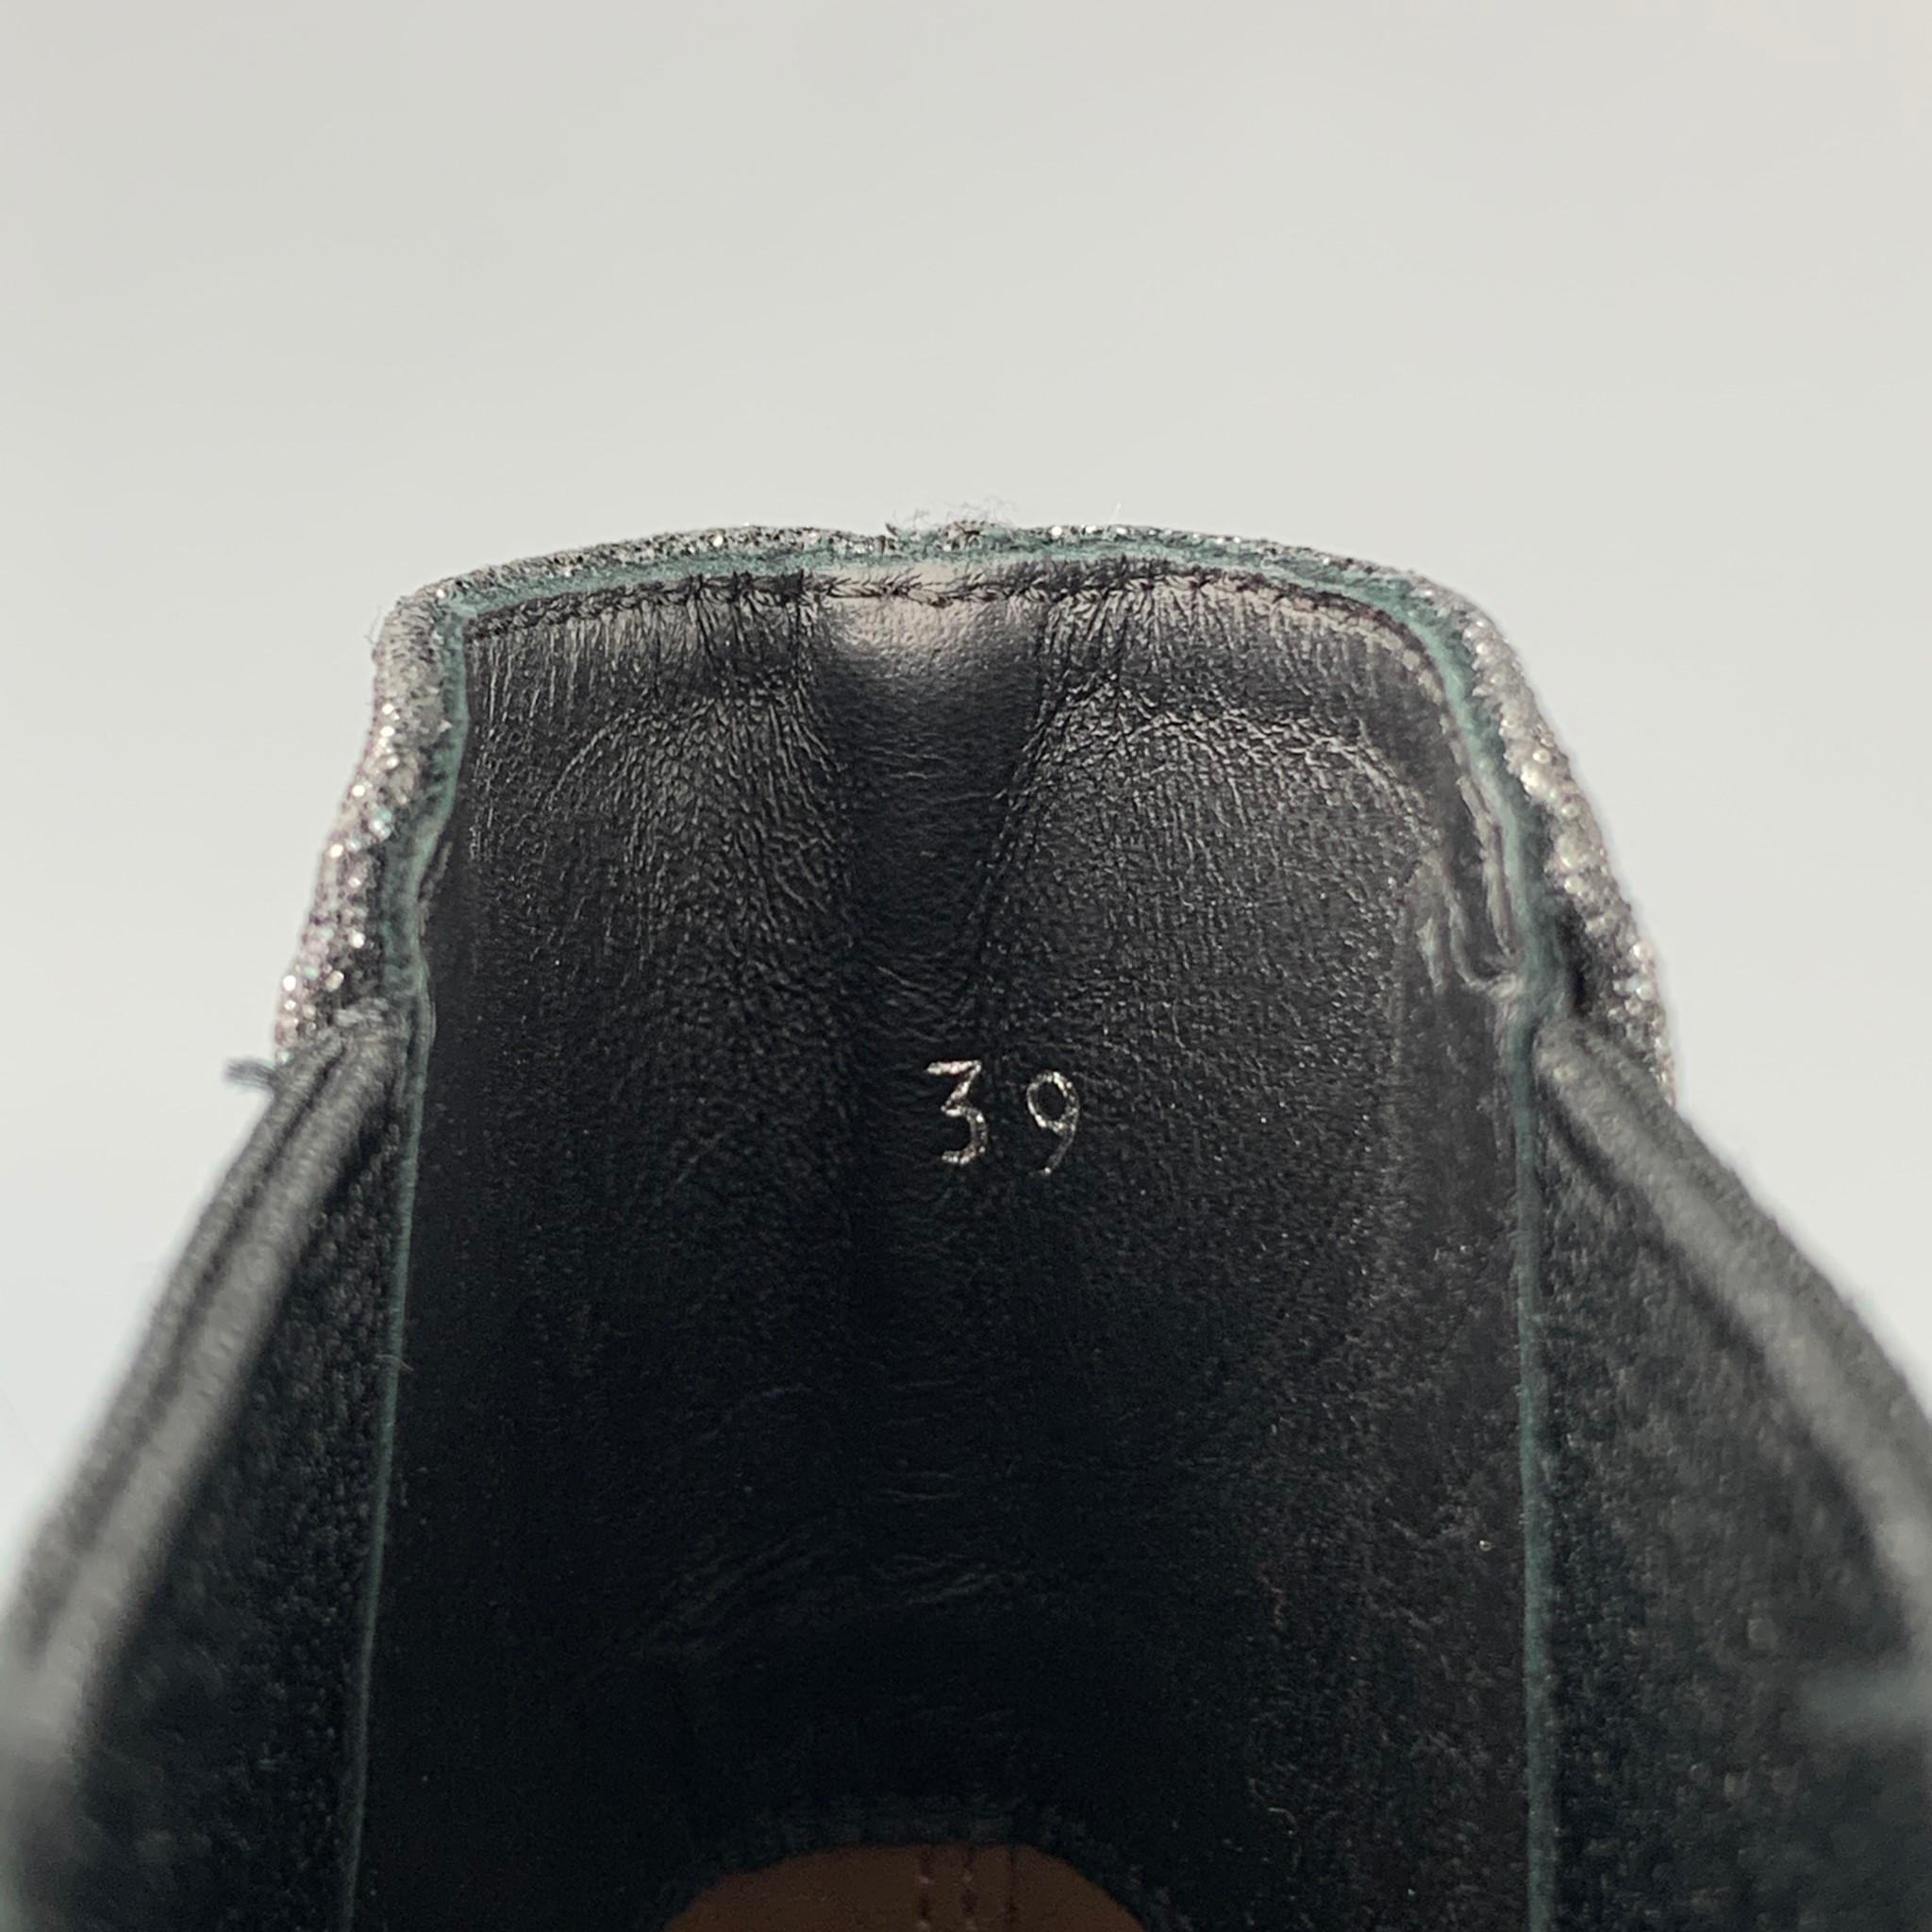 Women's DRIES VAN NOTEN Size 9 Black Glittered Leather Boots